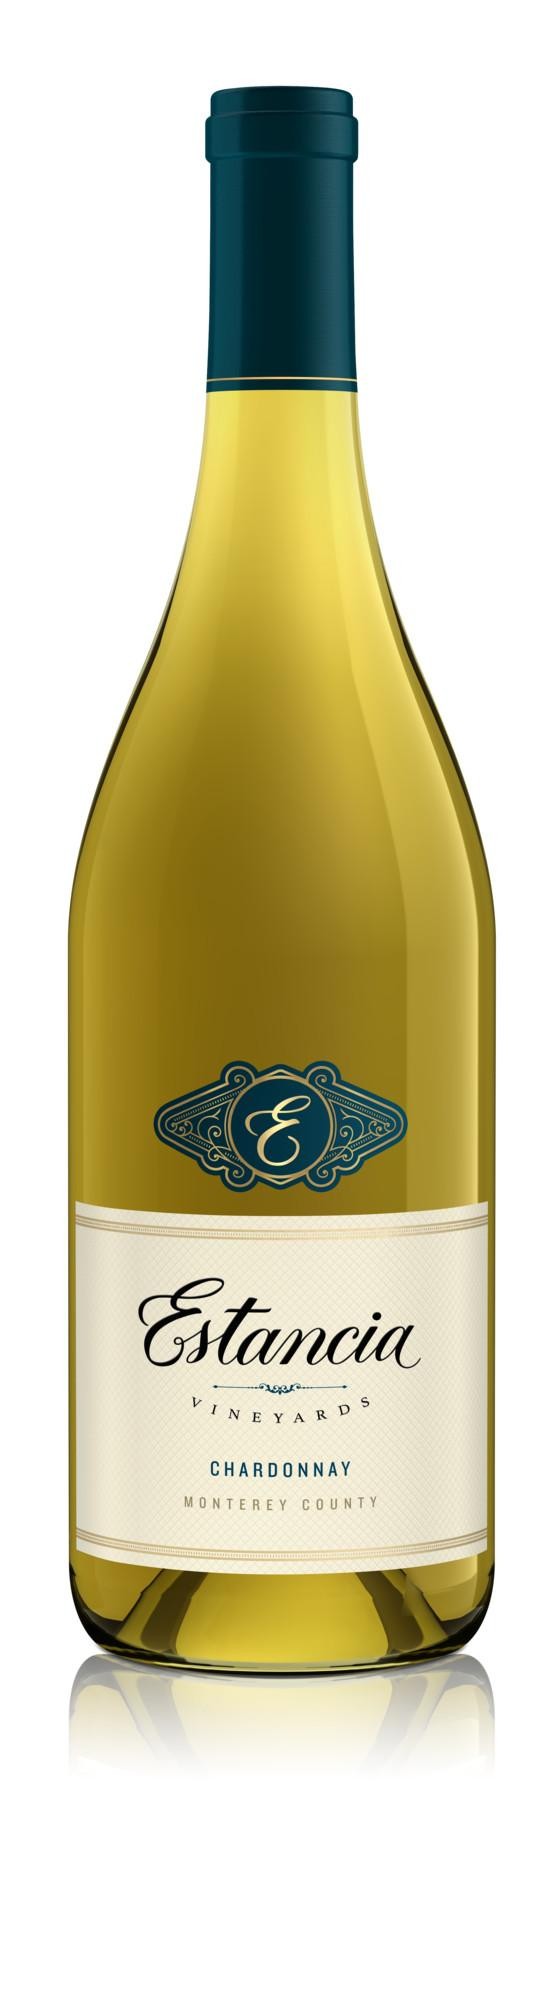 Estancia Chardonnay - White Wine from California - 750ml Bottle